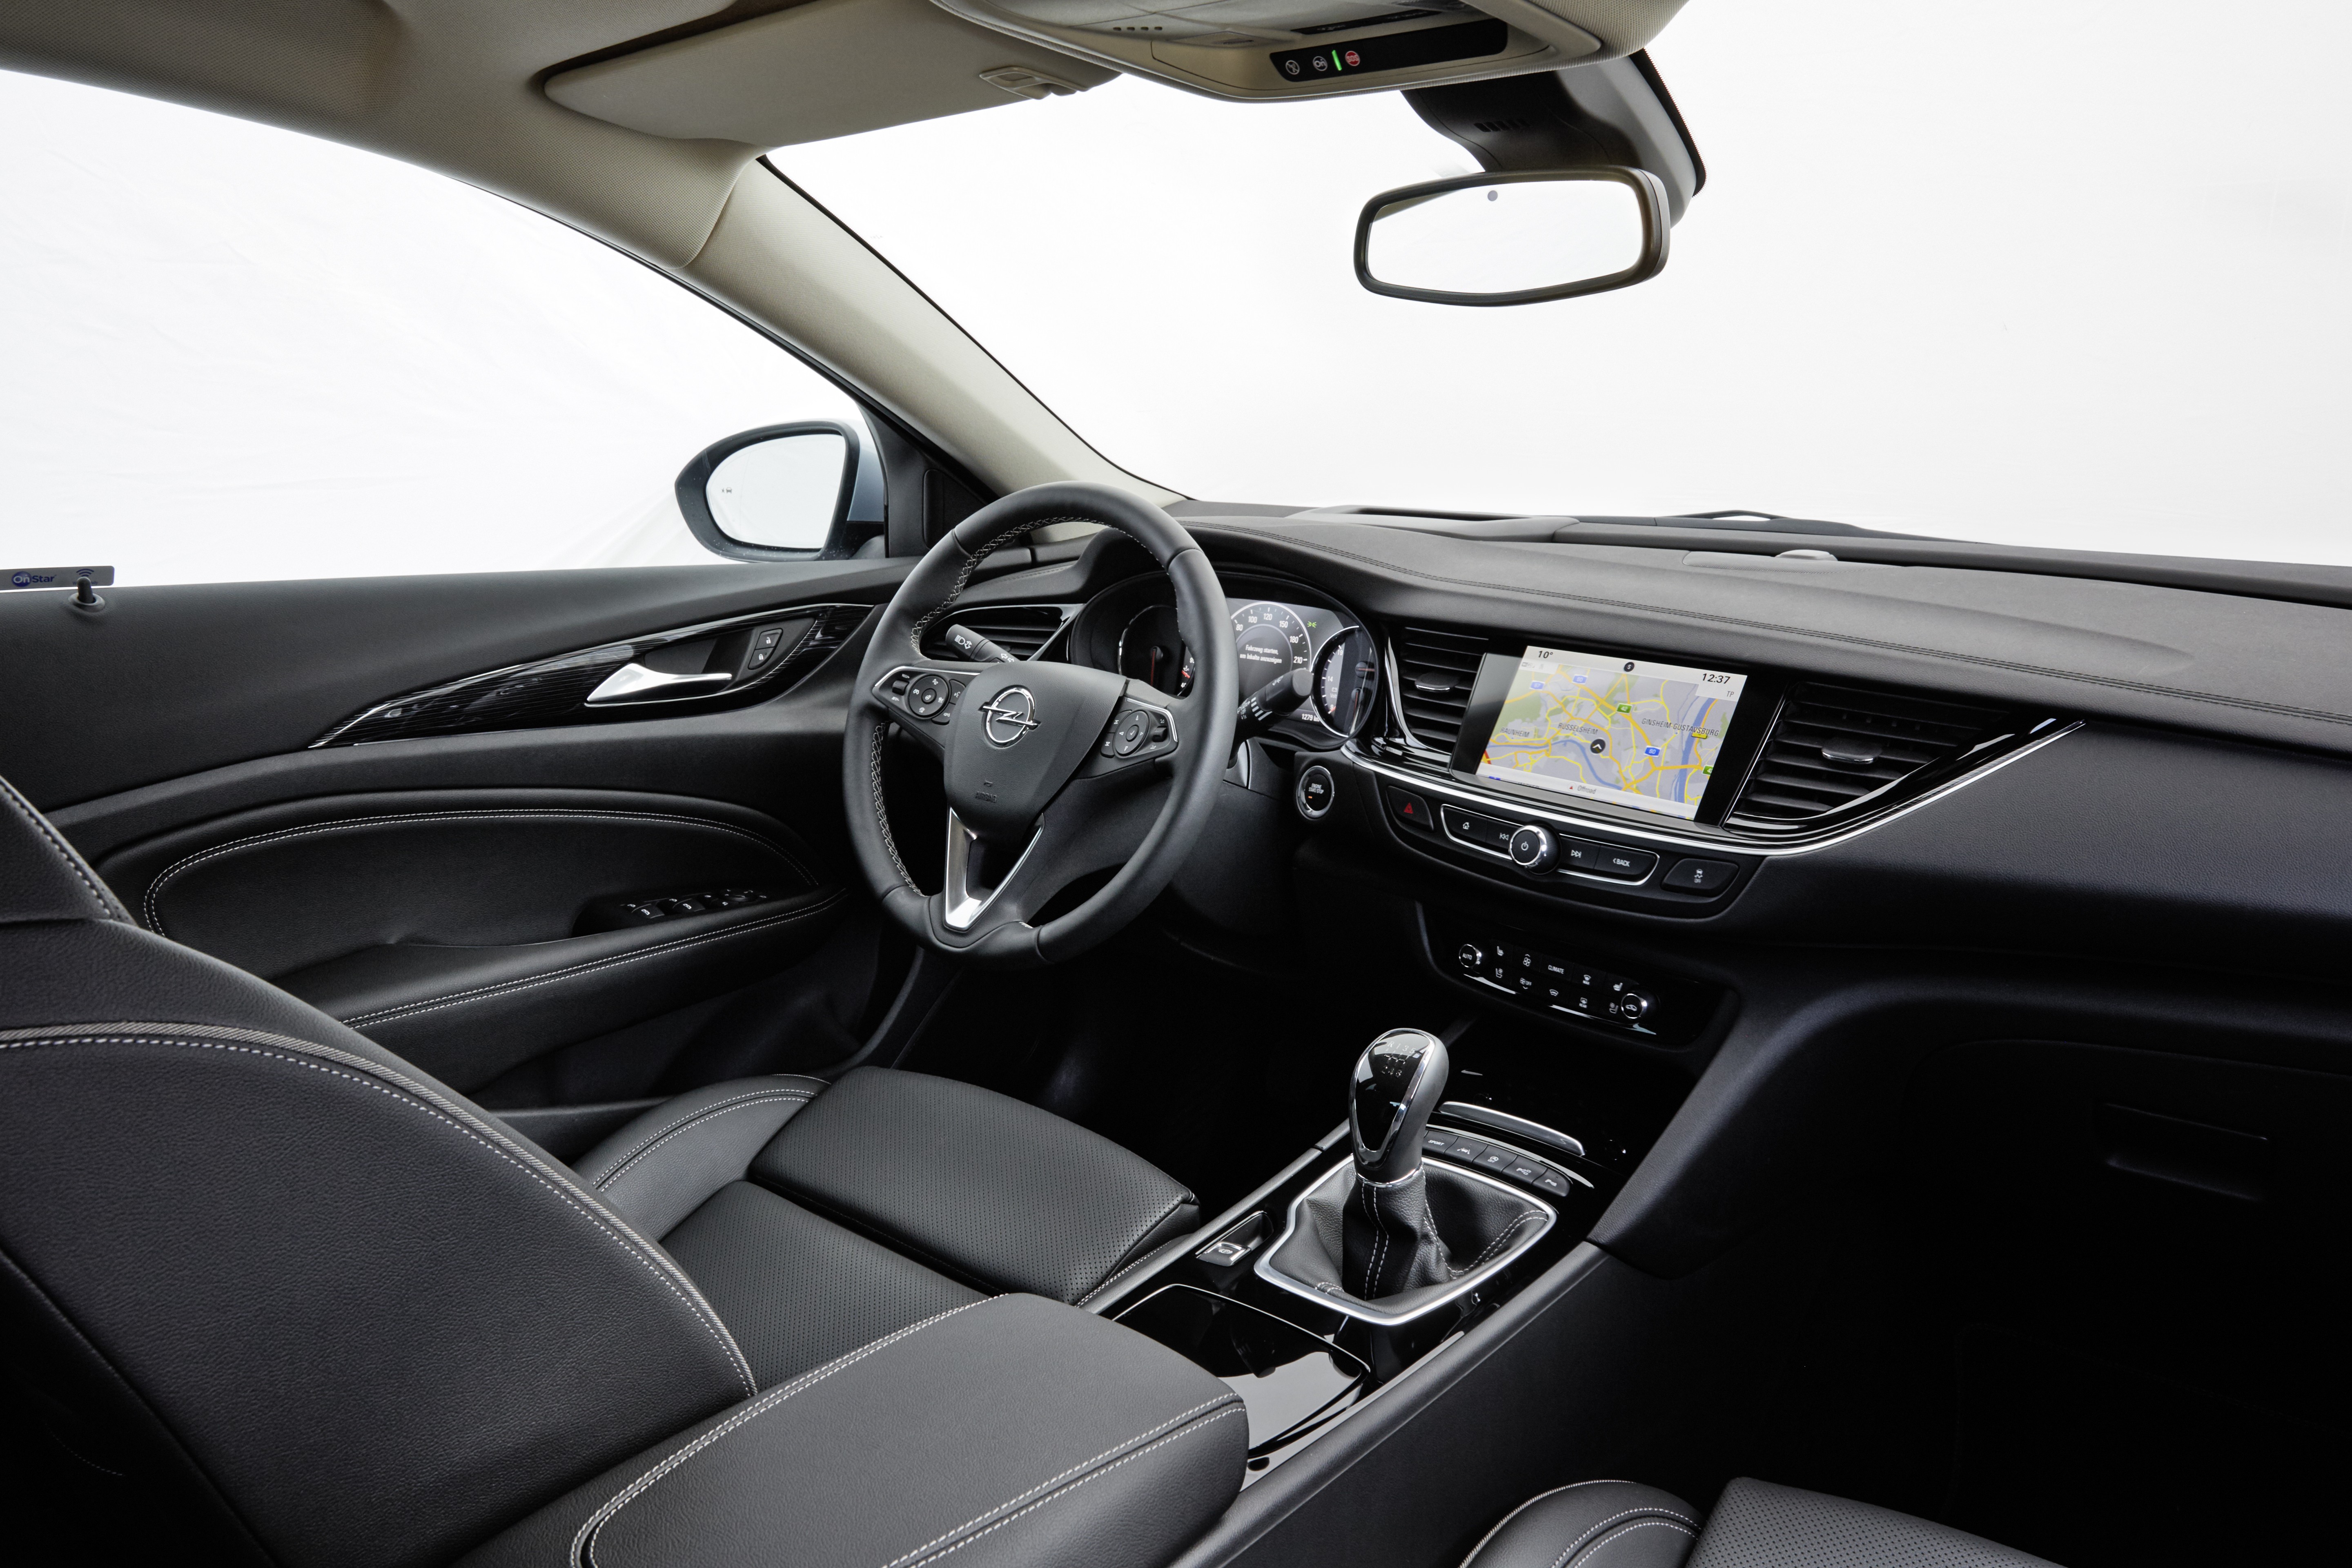 Opel Insignia Grand Sport exterior specifications